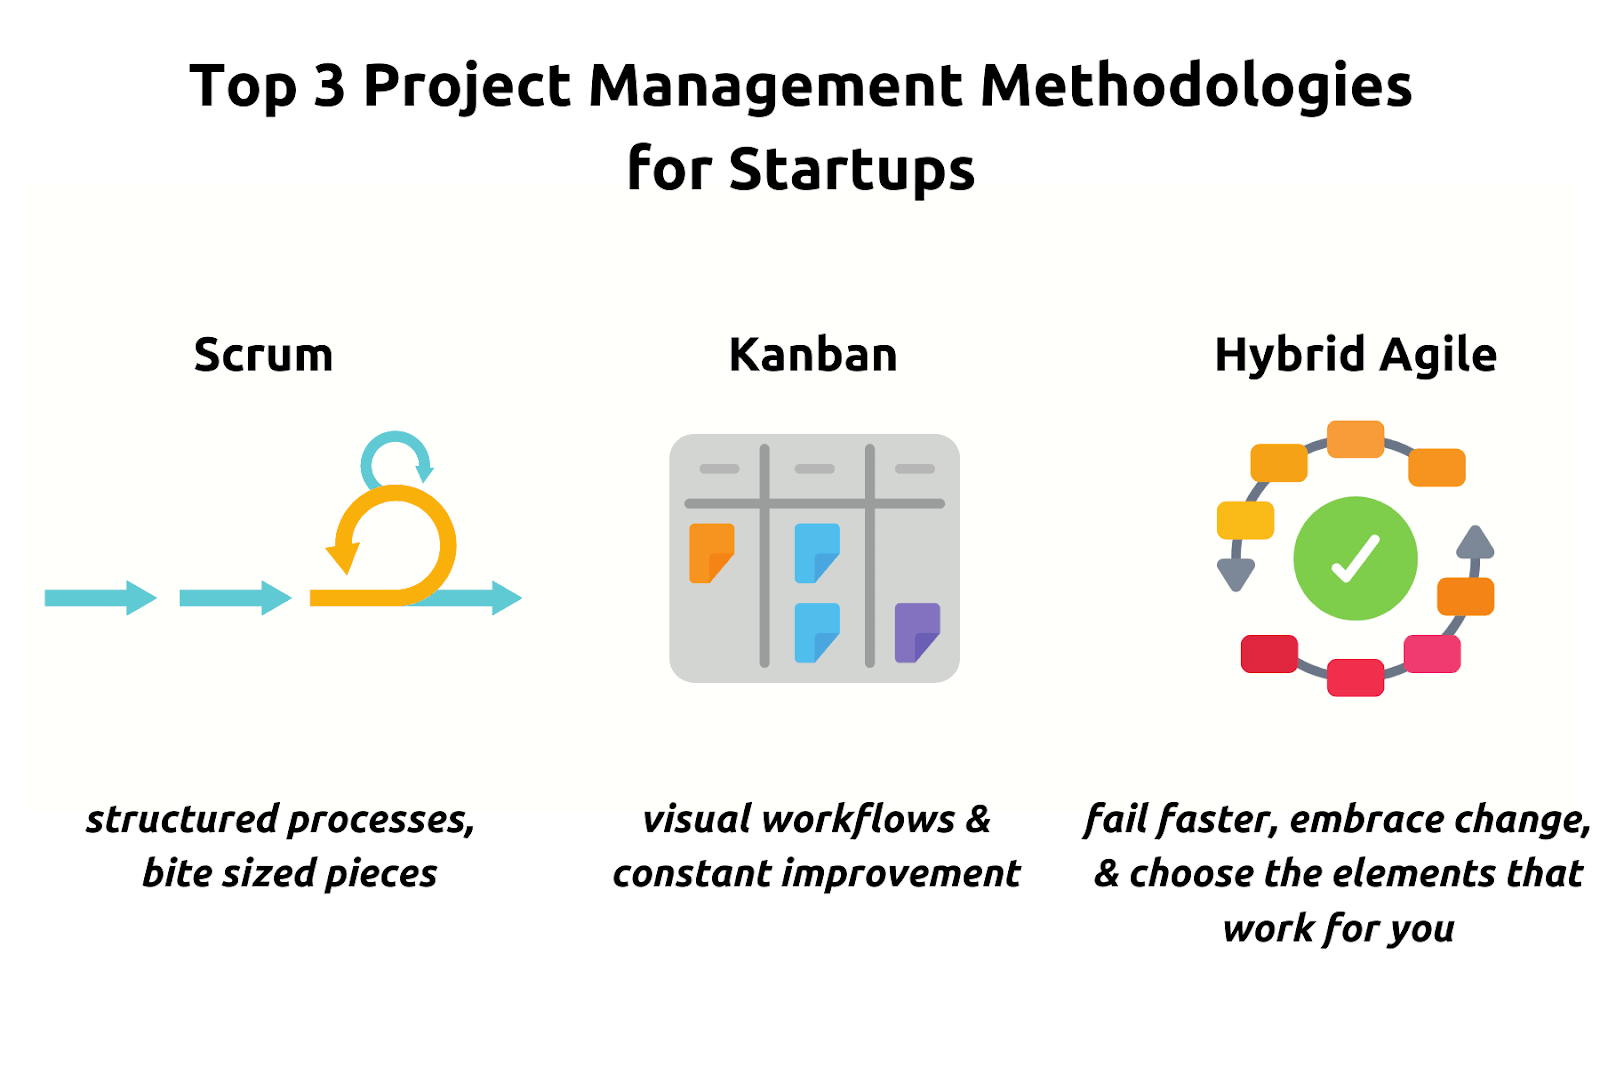 Top 3 project management methodologies for startups